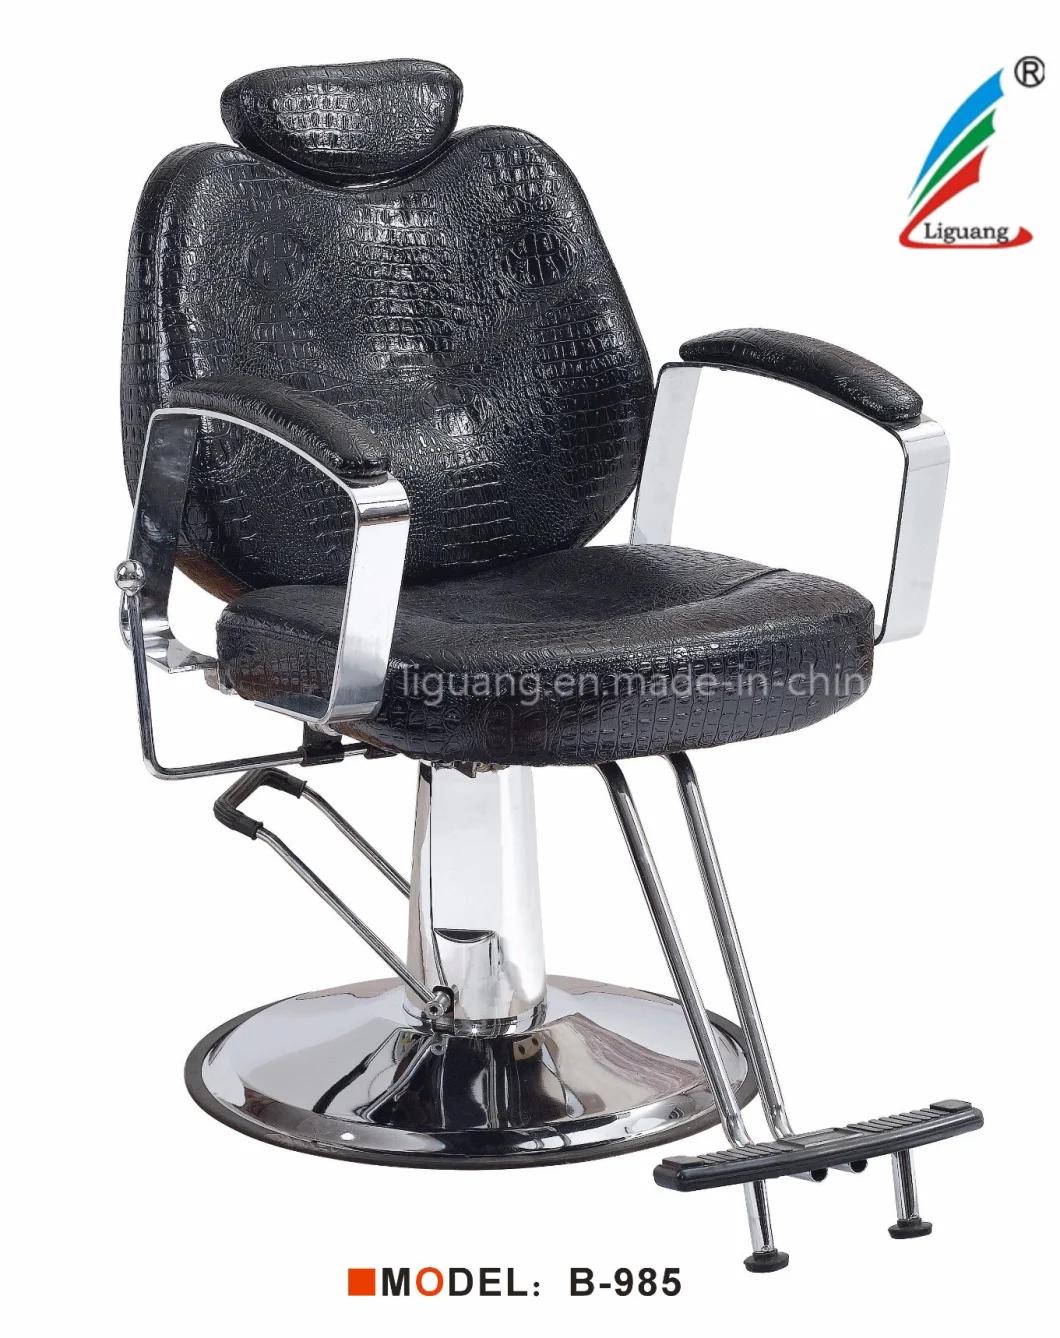 Hot Sale Make up Chair Salon Furniture Beauty Salon Equipment